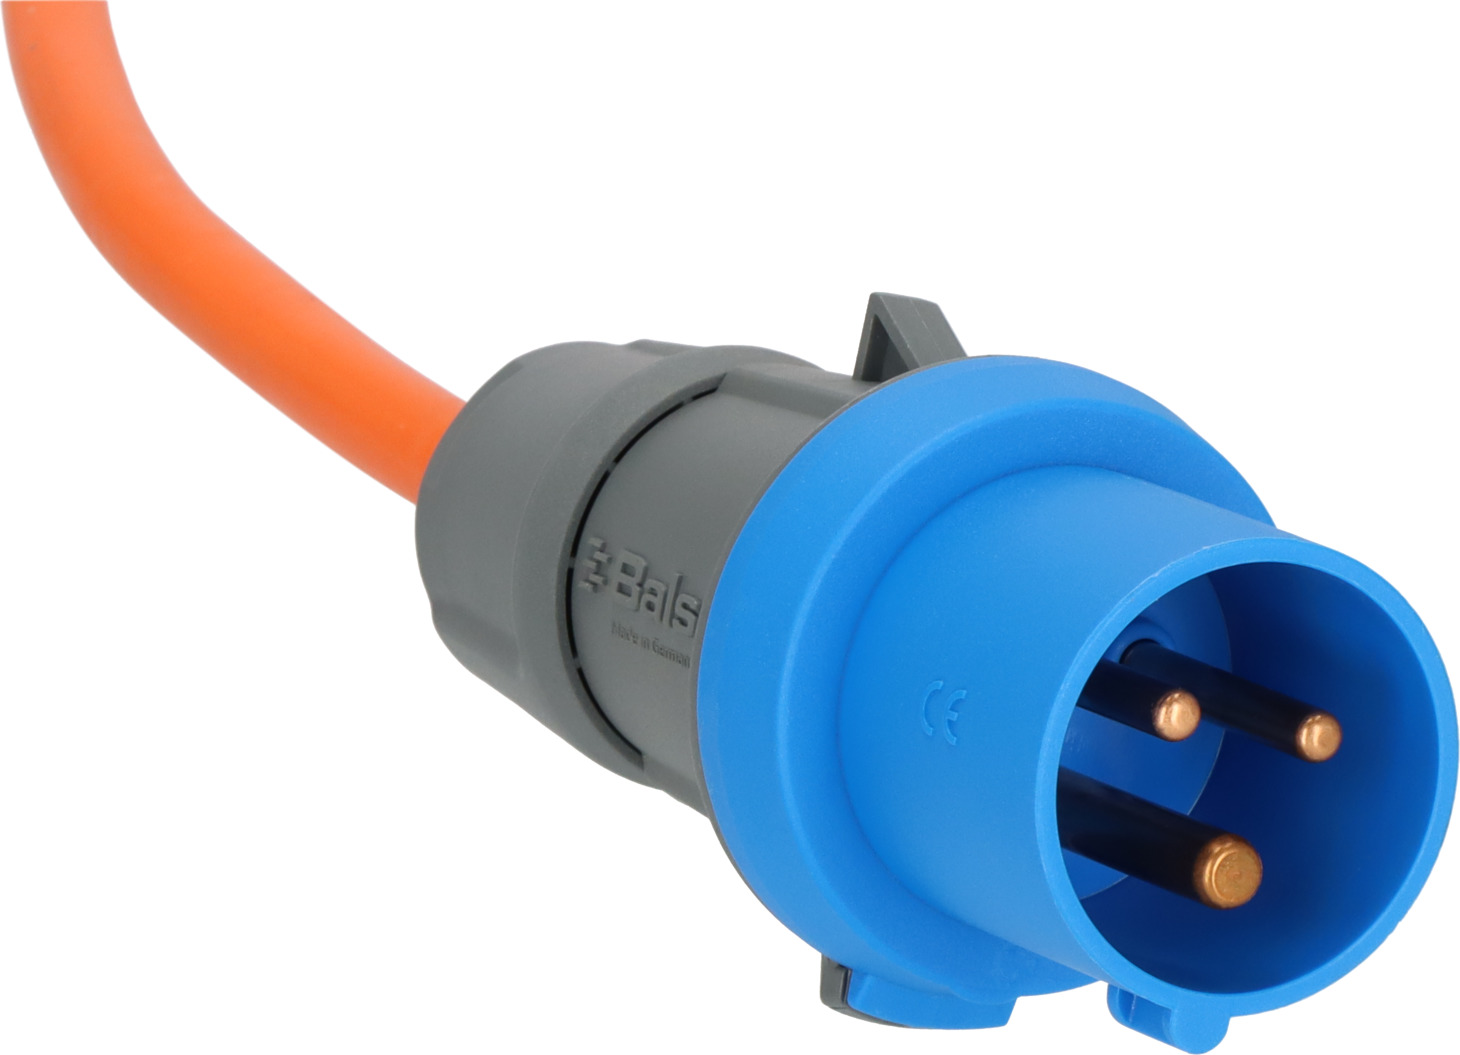 Cable alargador CEE IP44 para camping/marítimo 10m H07RN-F 3G2,5 naranja  CEE 230V/16A enchufe y acoplamiento